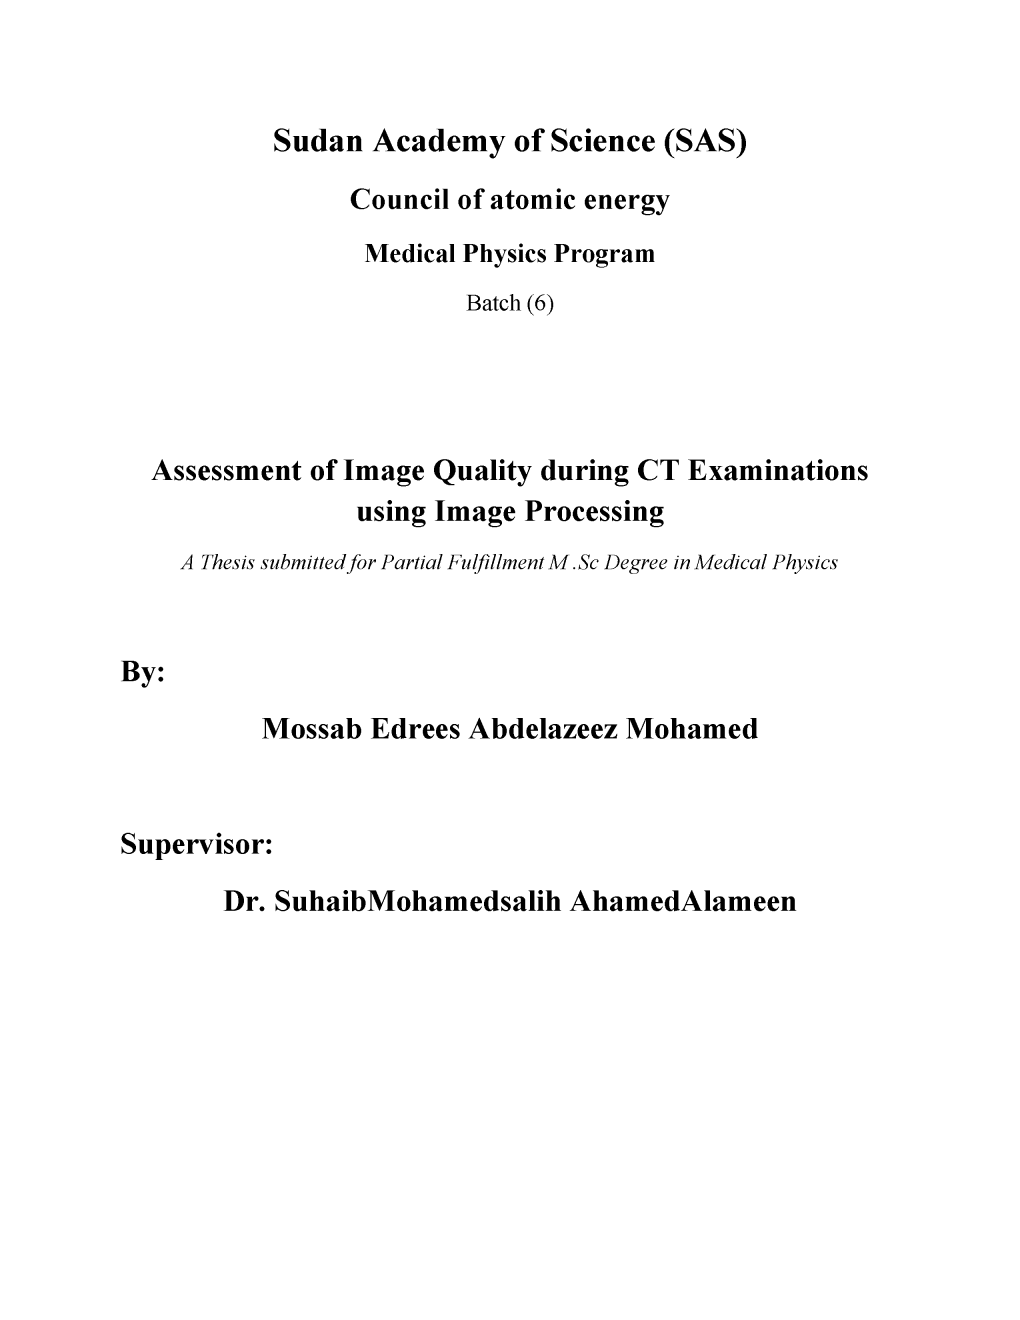 Sudan Academy of Science (SAS) Council of Atomic Energy Medical Physics Program